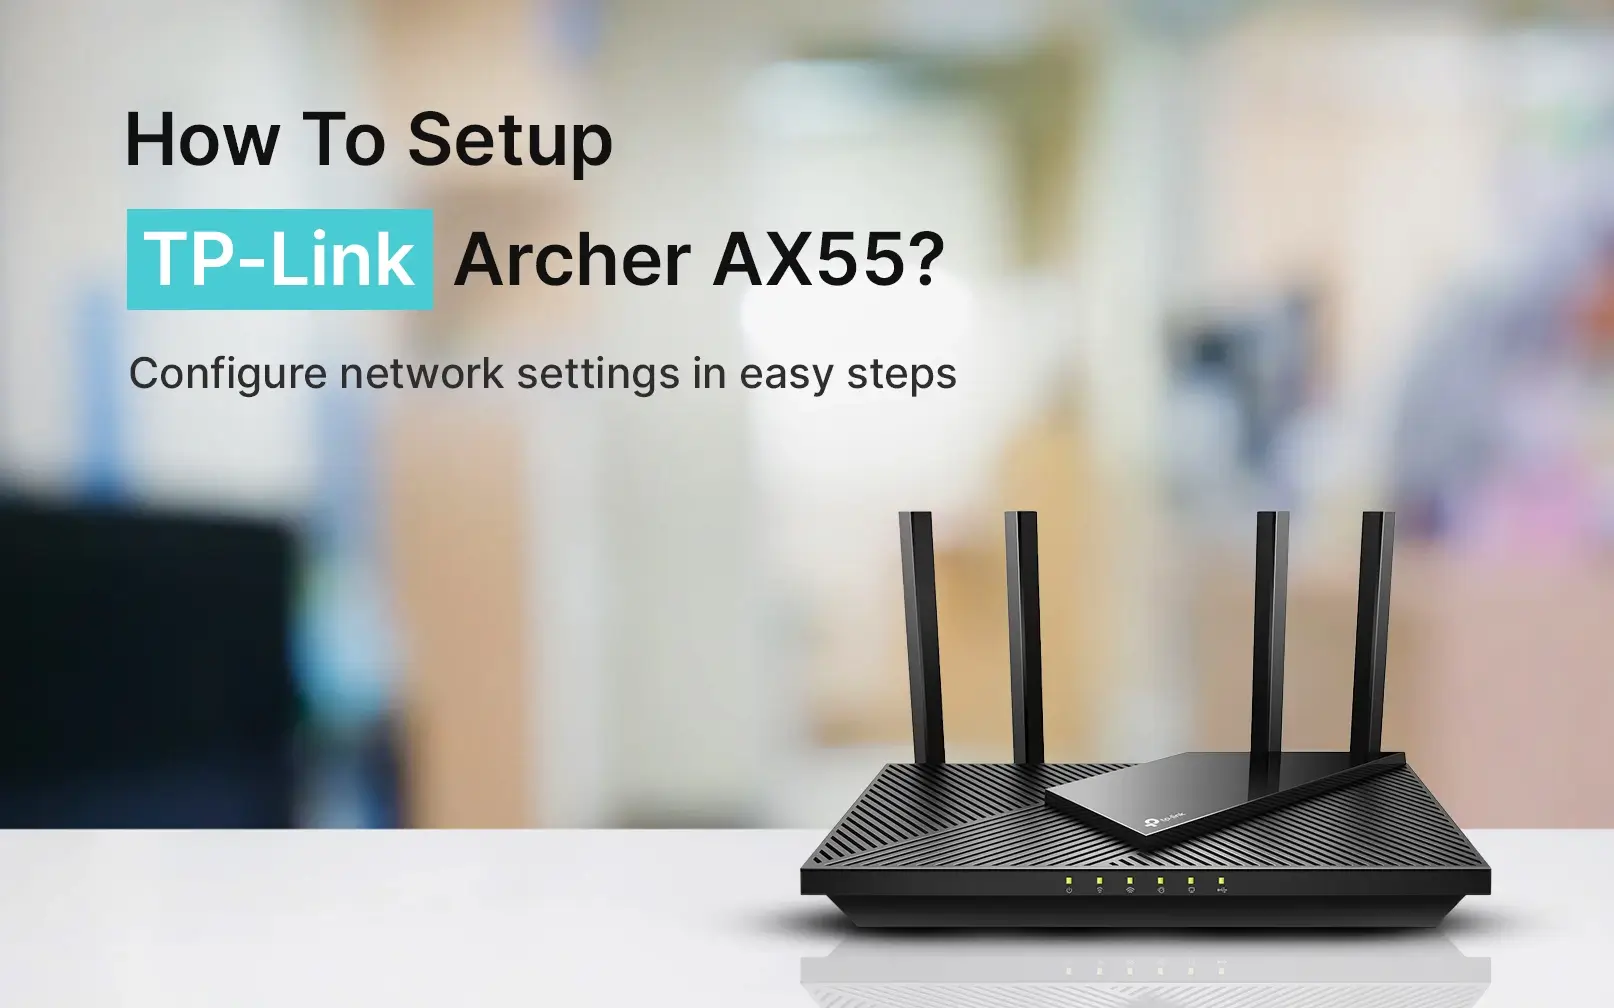 Christ Brother Revolutionary TP-Link Archer AX55 Setup | How To Setup TP-Link Archer AX55?